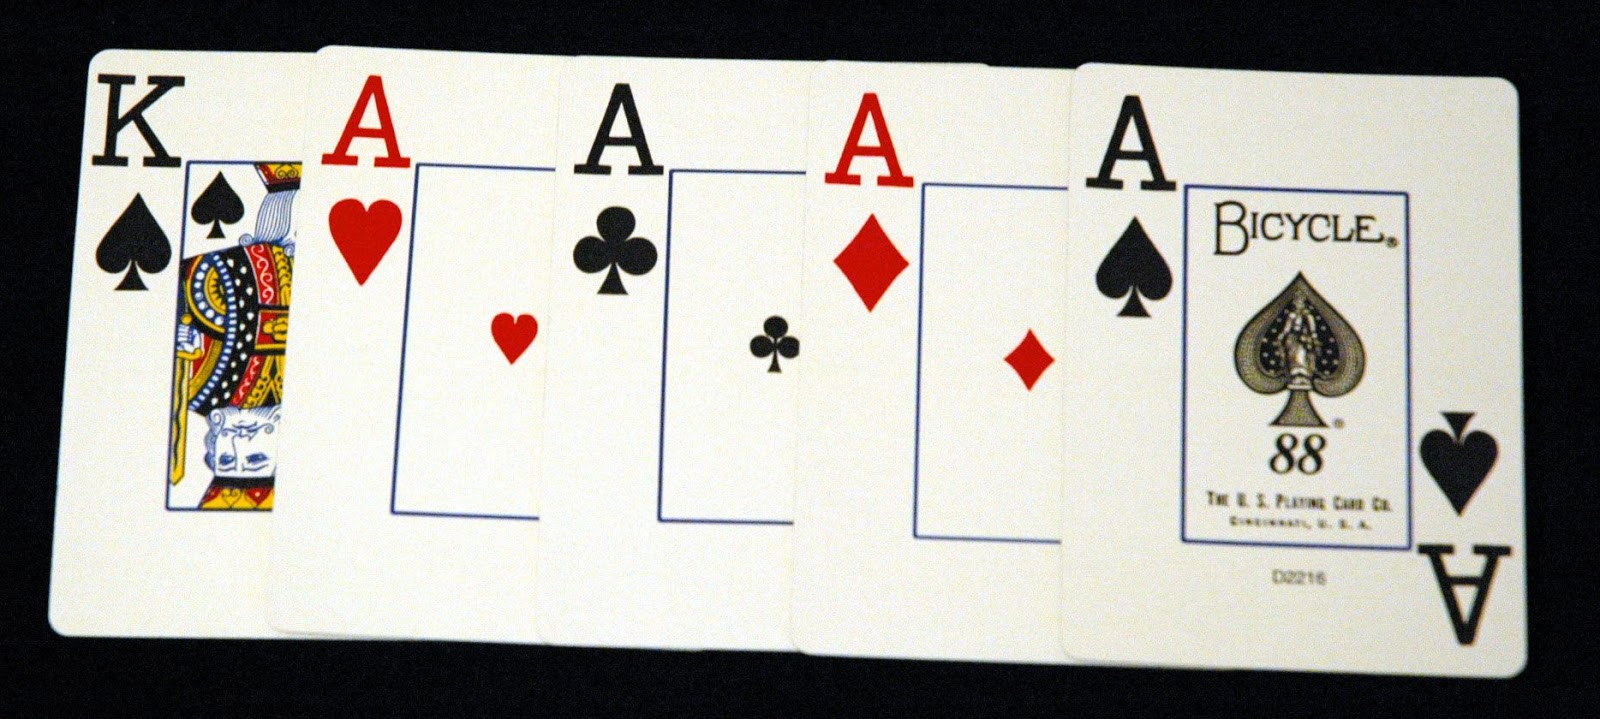 Старшая карта. Покер 4 туза и Король. Каре Покер. Каре Покер комбинация. Комбинация Покер четыре туза и Джокер.